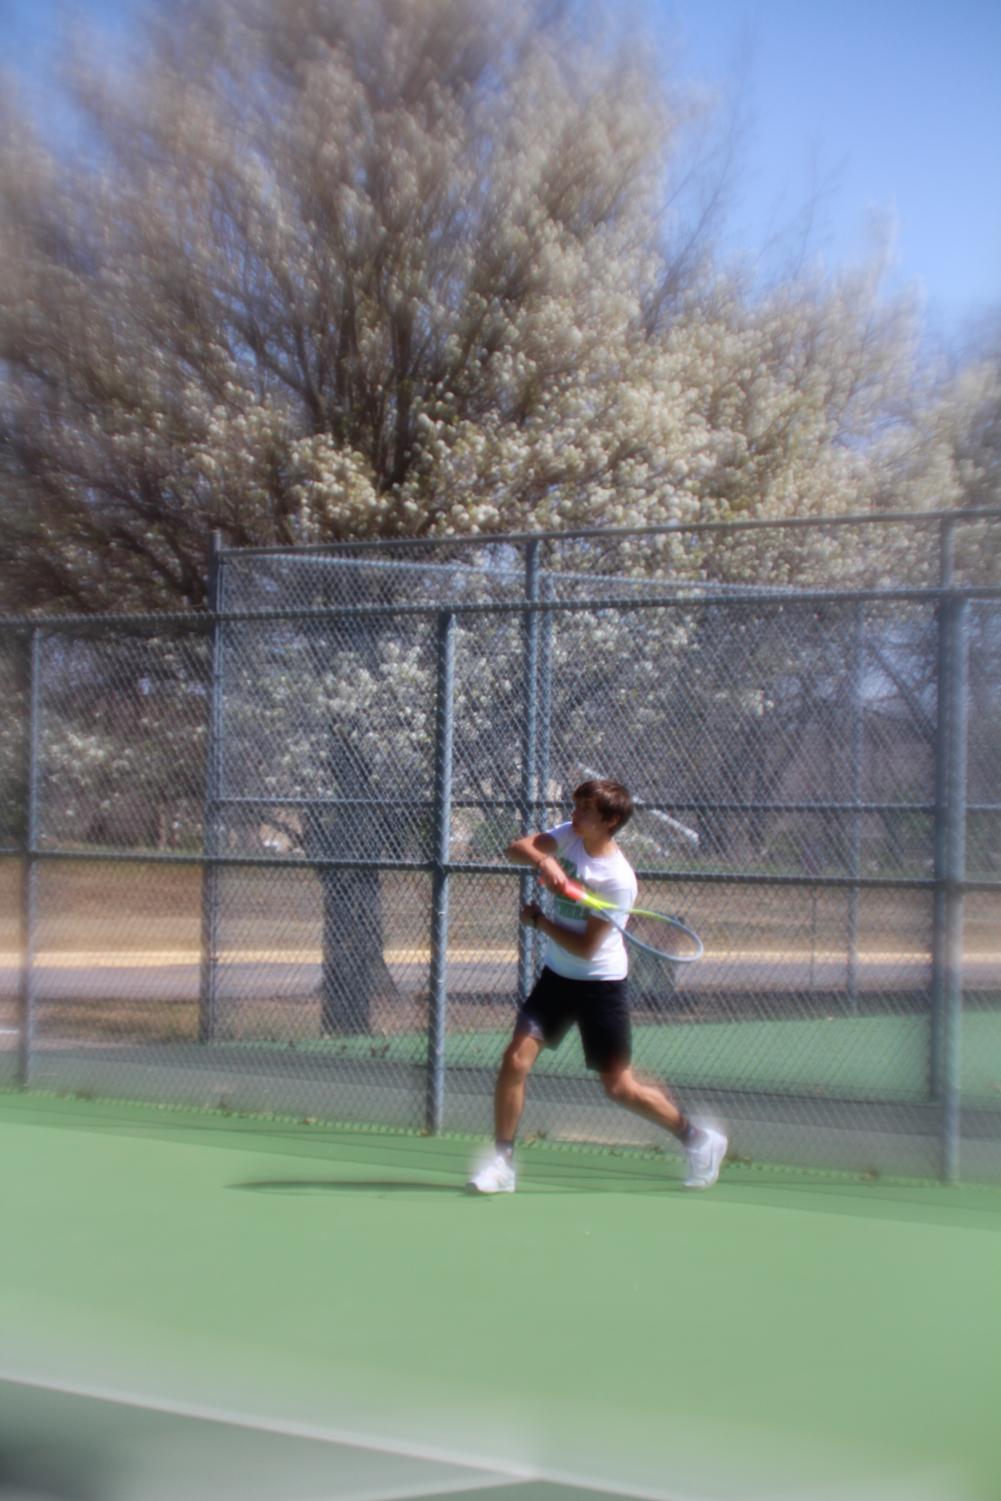 Tennis+Meet+4%2F14+%28Photos+by+Larry+Marczynski%29